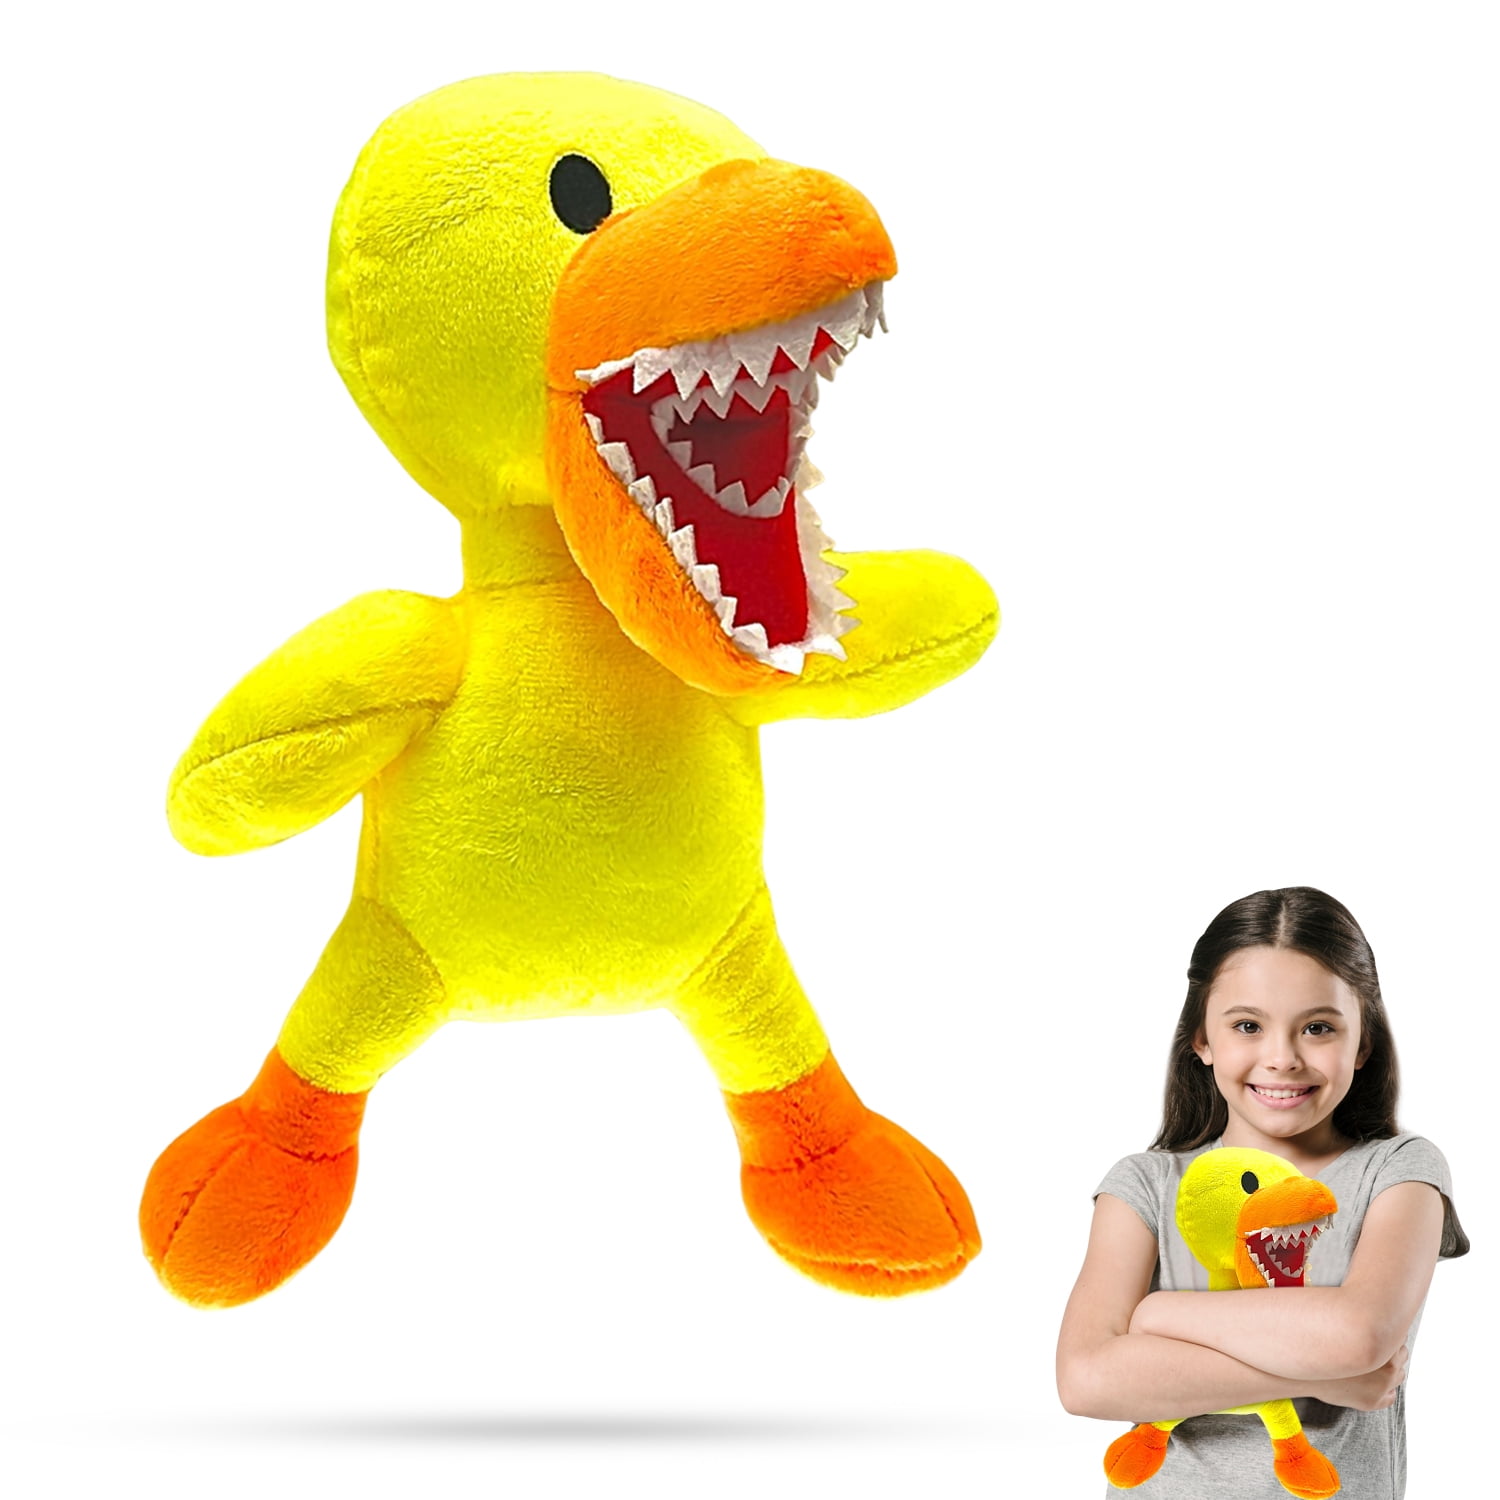 Benolls Yellow Rainbow Friends Chapter 2 Lookies Plush Toys,9.8 inch Soft  Rainbow Friends Plush Stuffed Animal Doll Gift for Kids Children(Yellow)